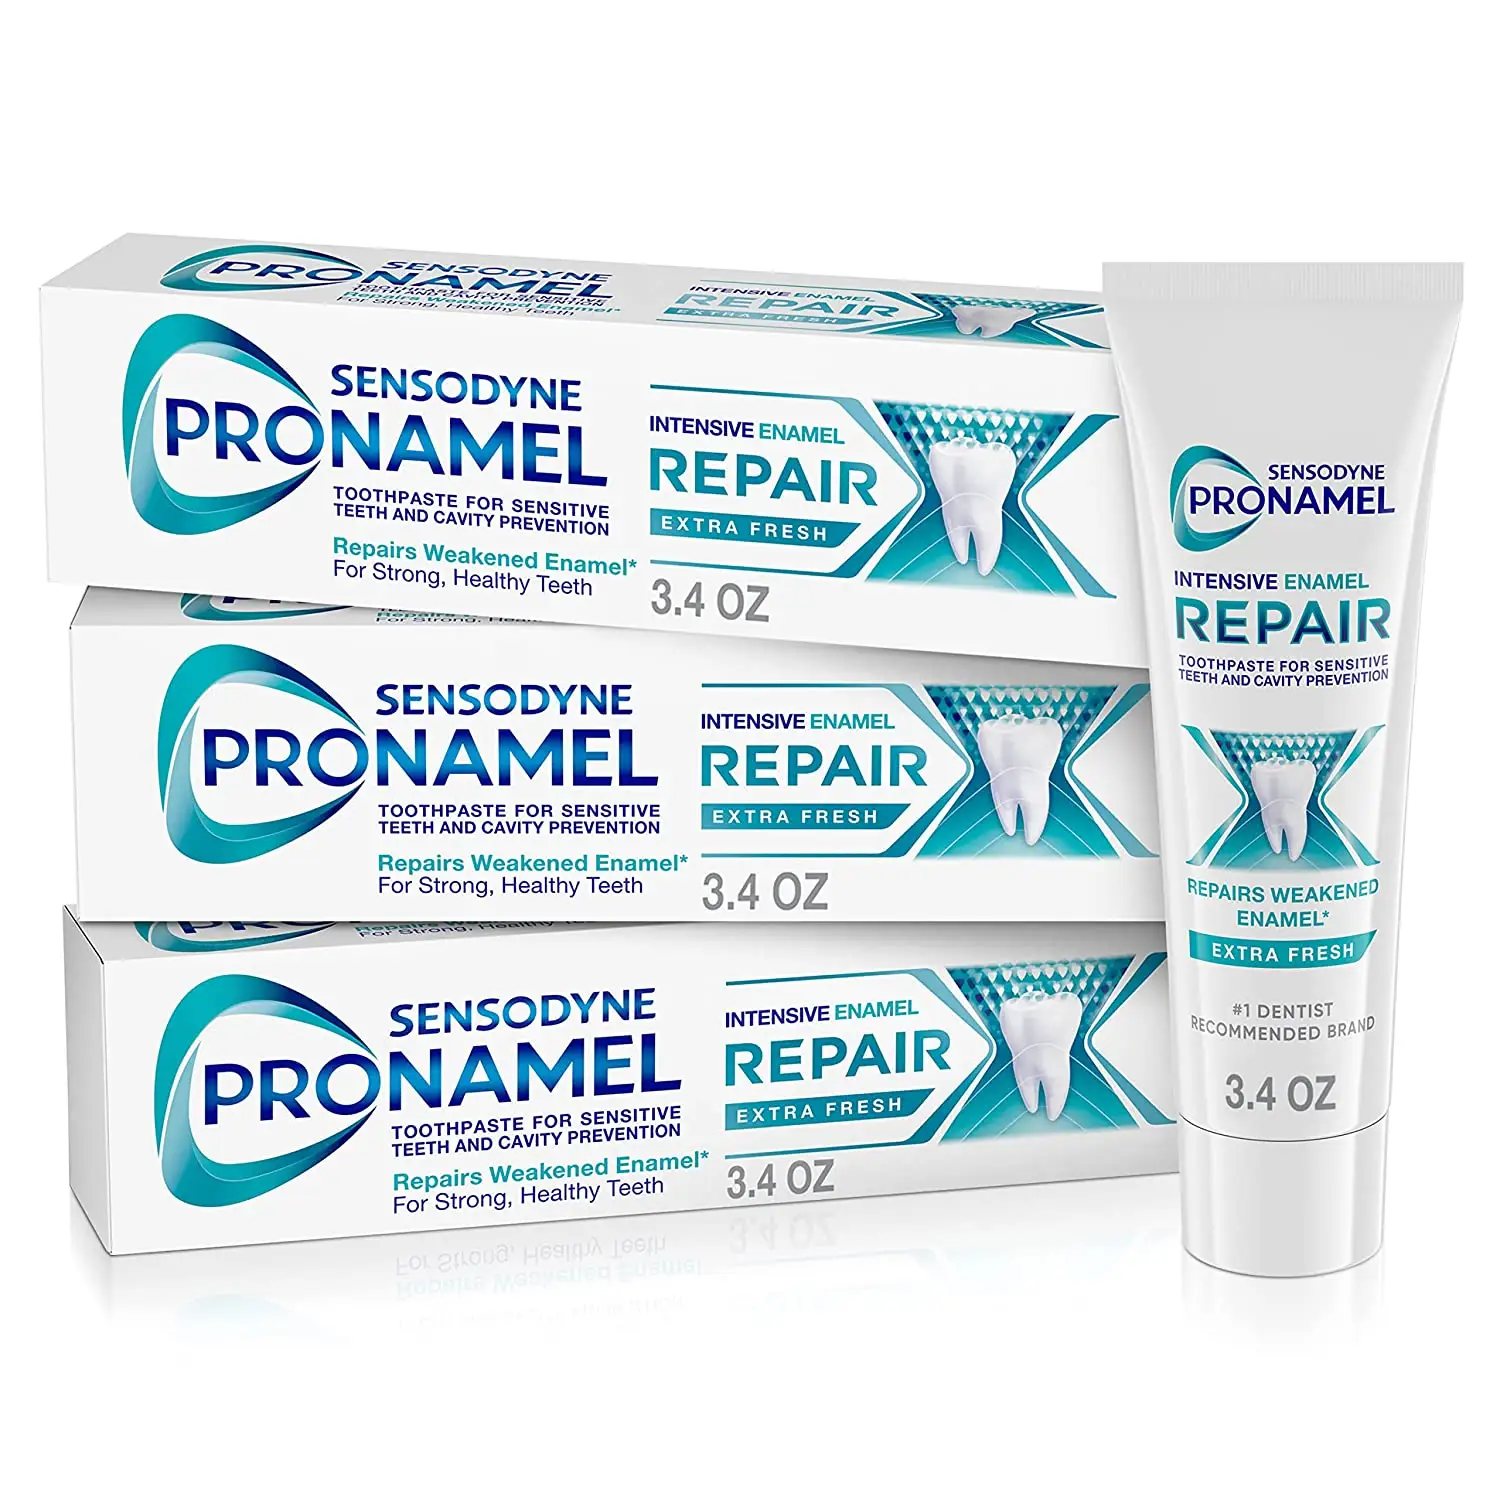 Sensodyne Pronamel Intensive Enamel Repair Toothpaste for Sensitive Teeth, Strengthen Enamel, Extra Fresh - 3.4